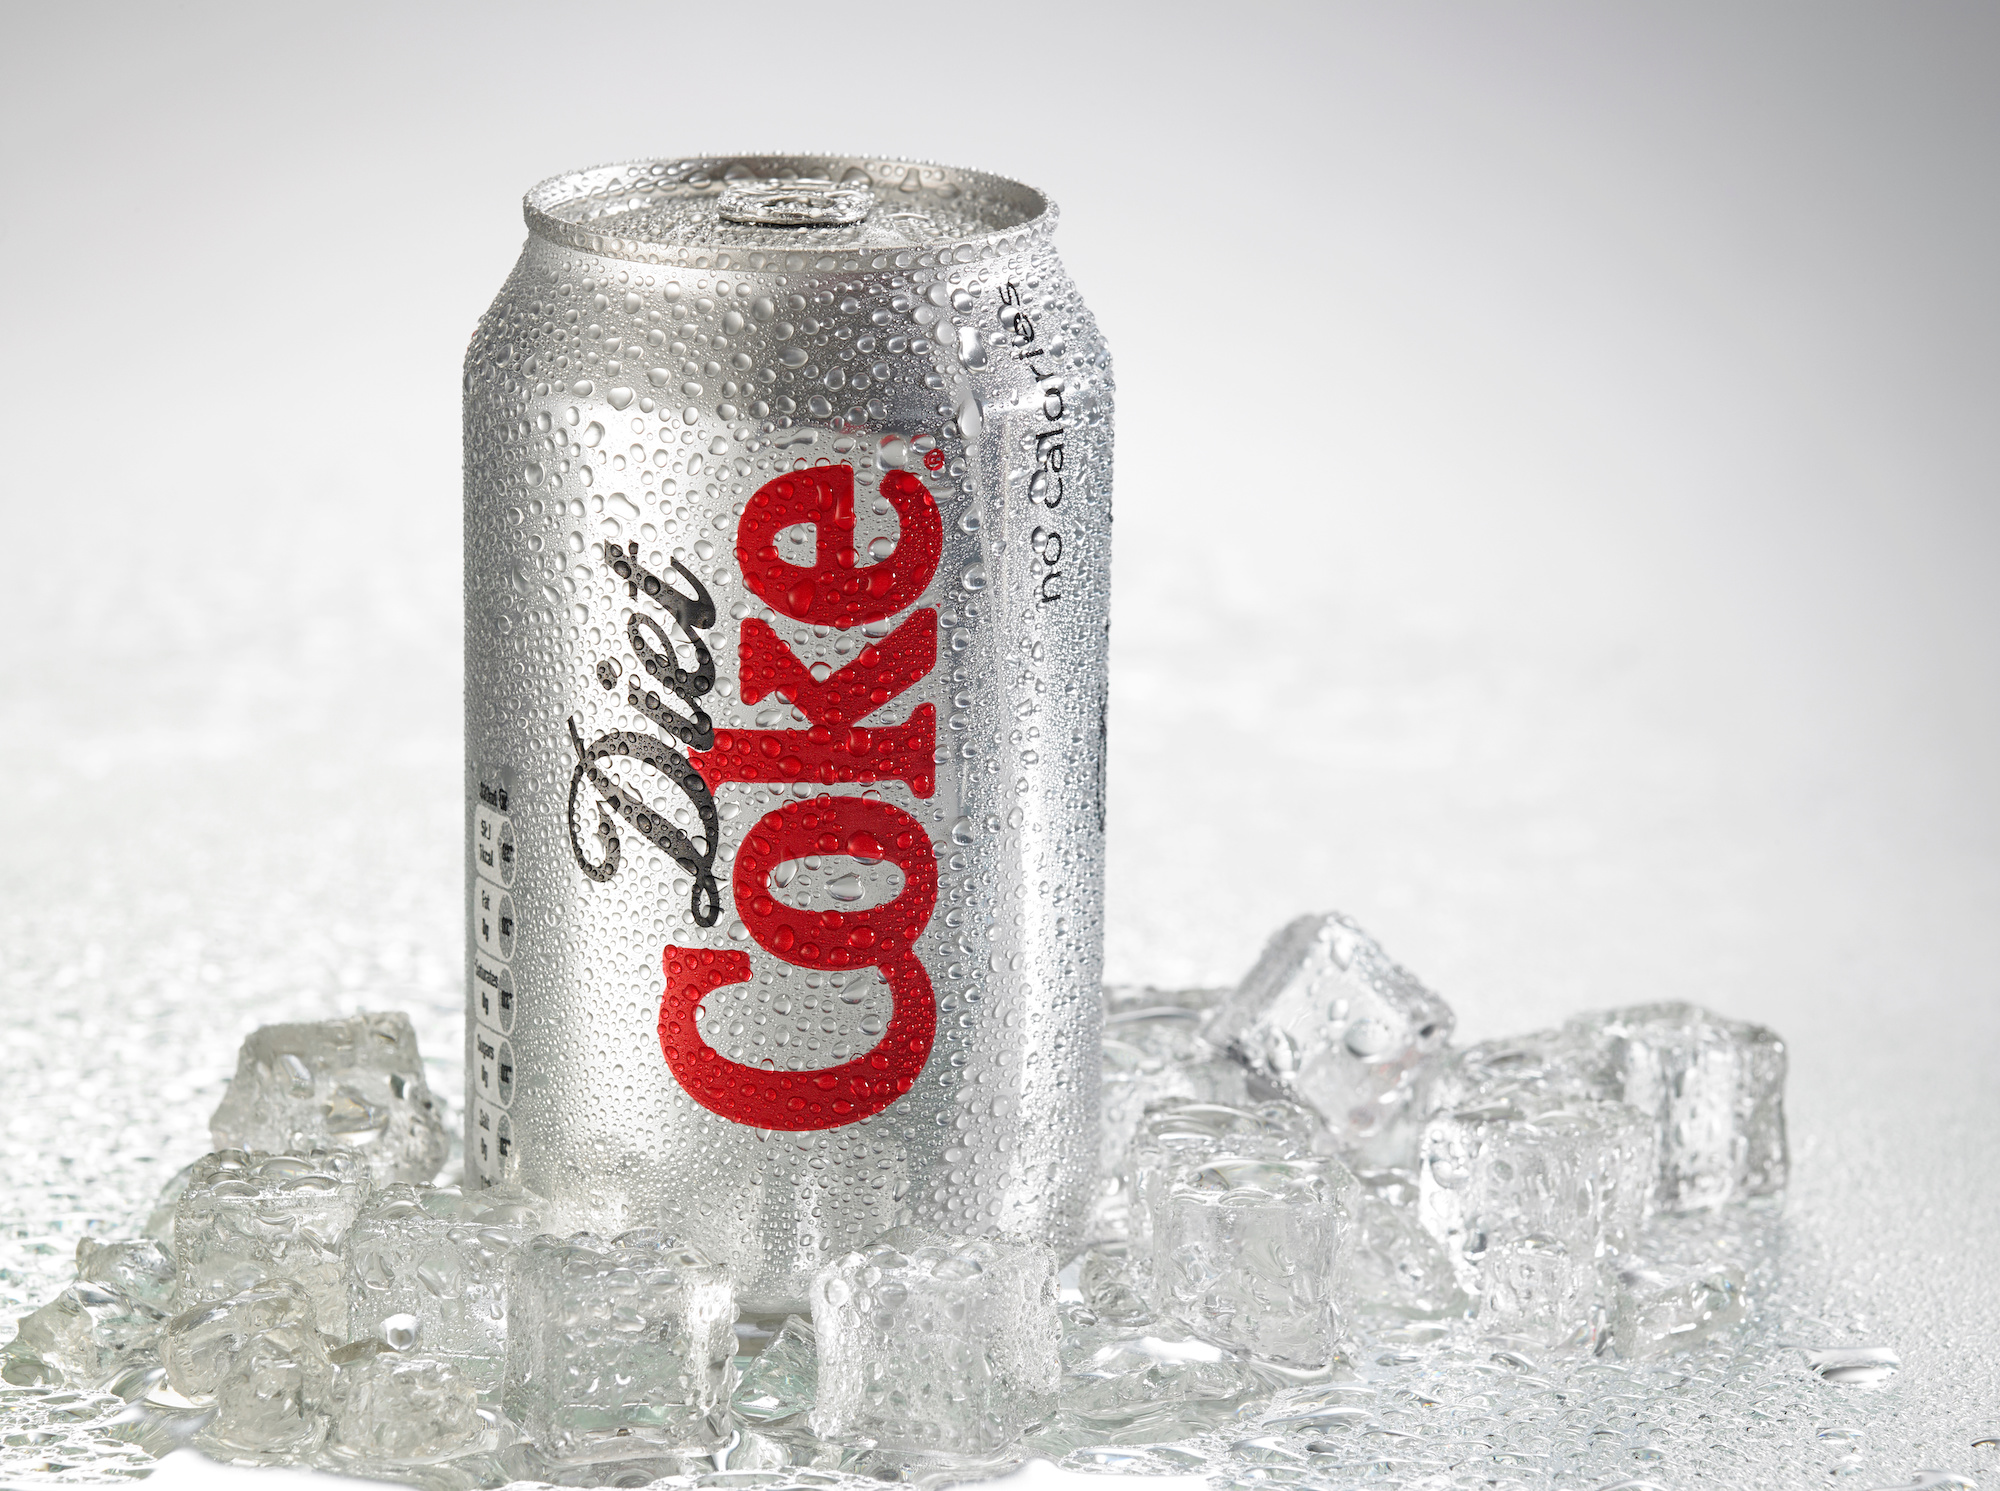 Coke Zero vs. Diet Coke